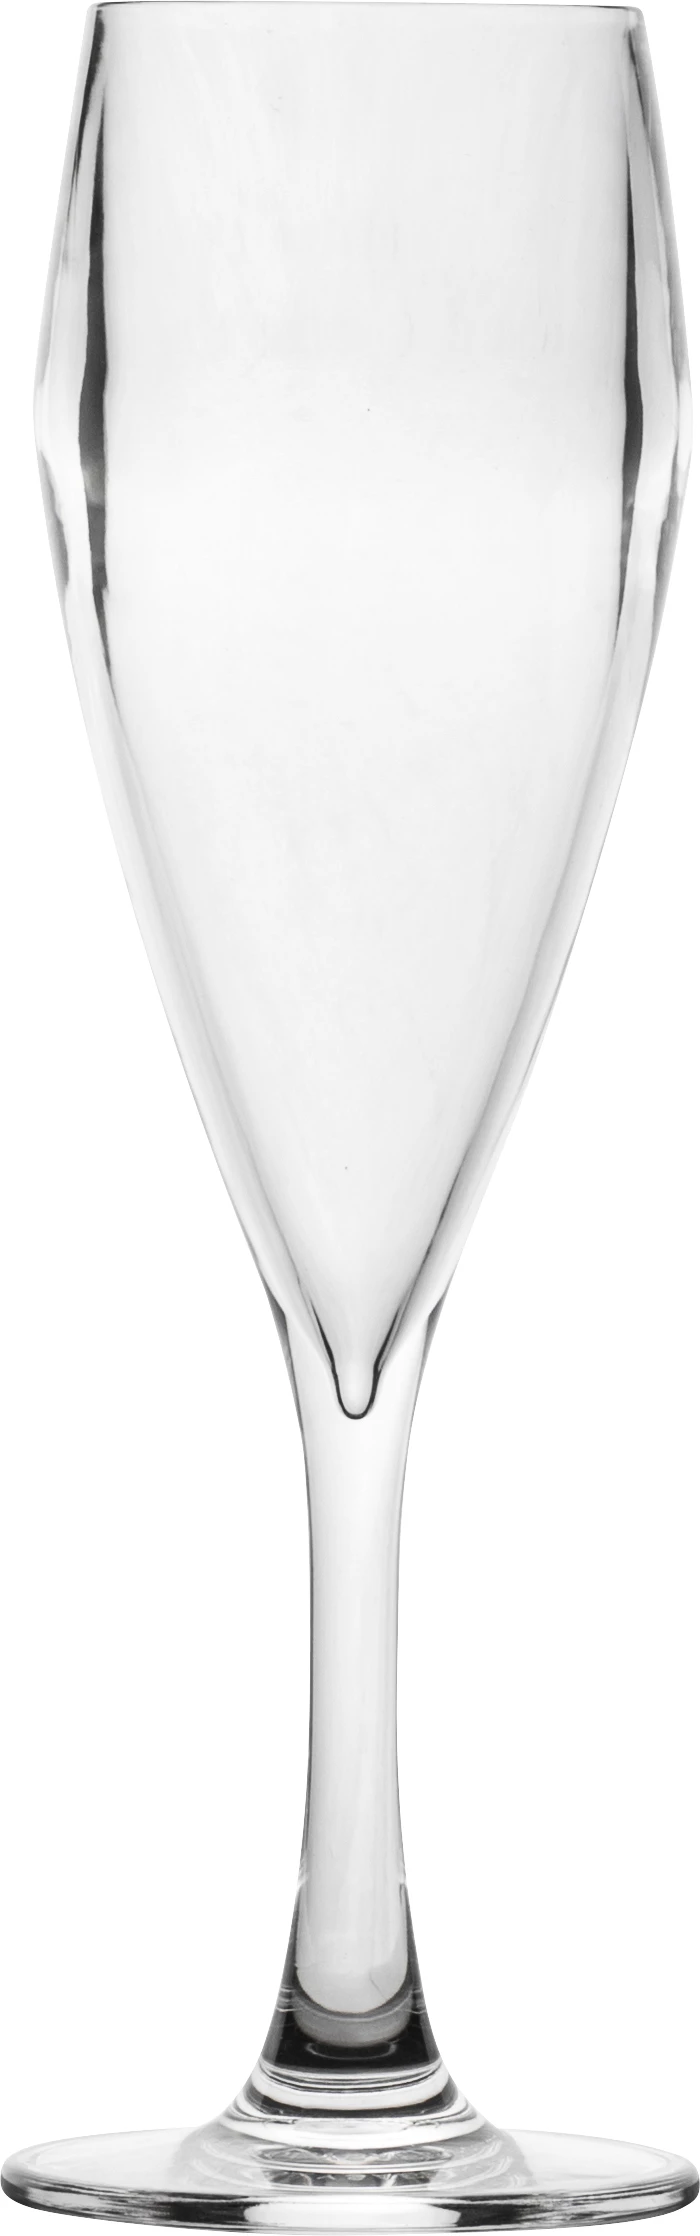 GlassFORever champagneglas, 20 cl, H22 cm